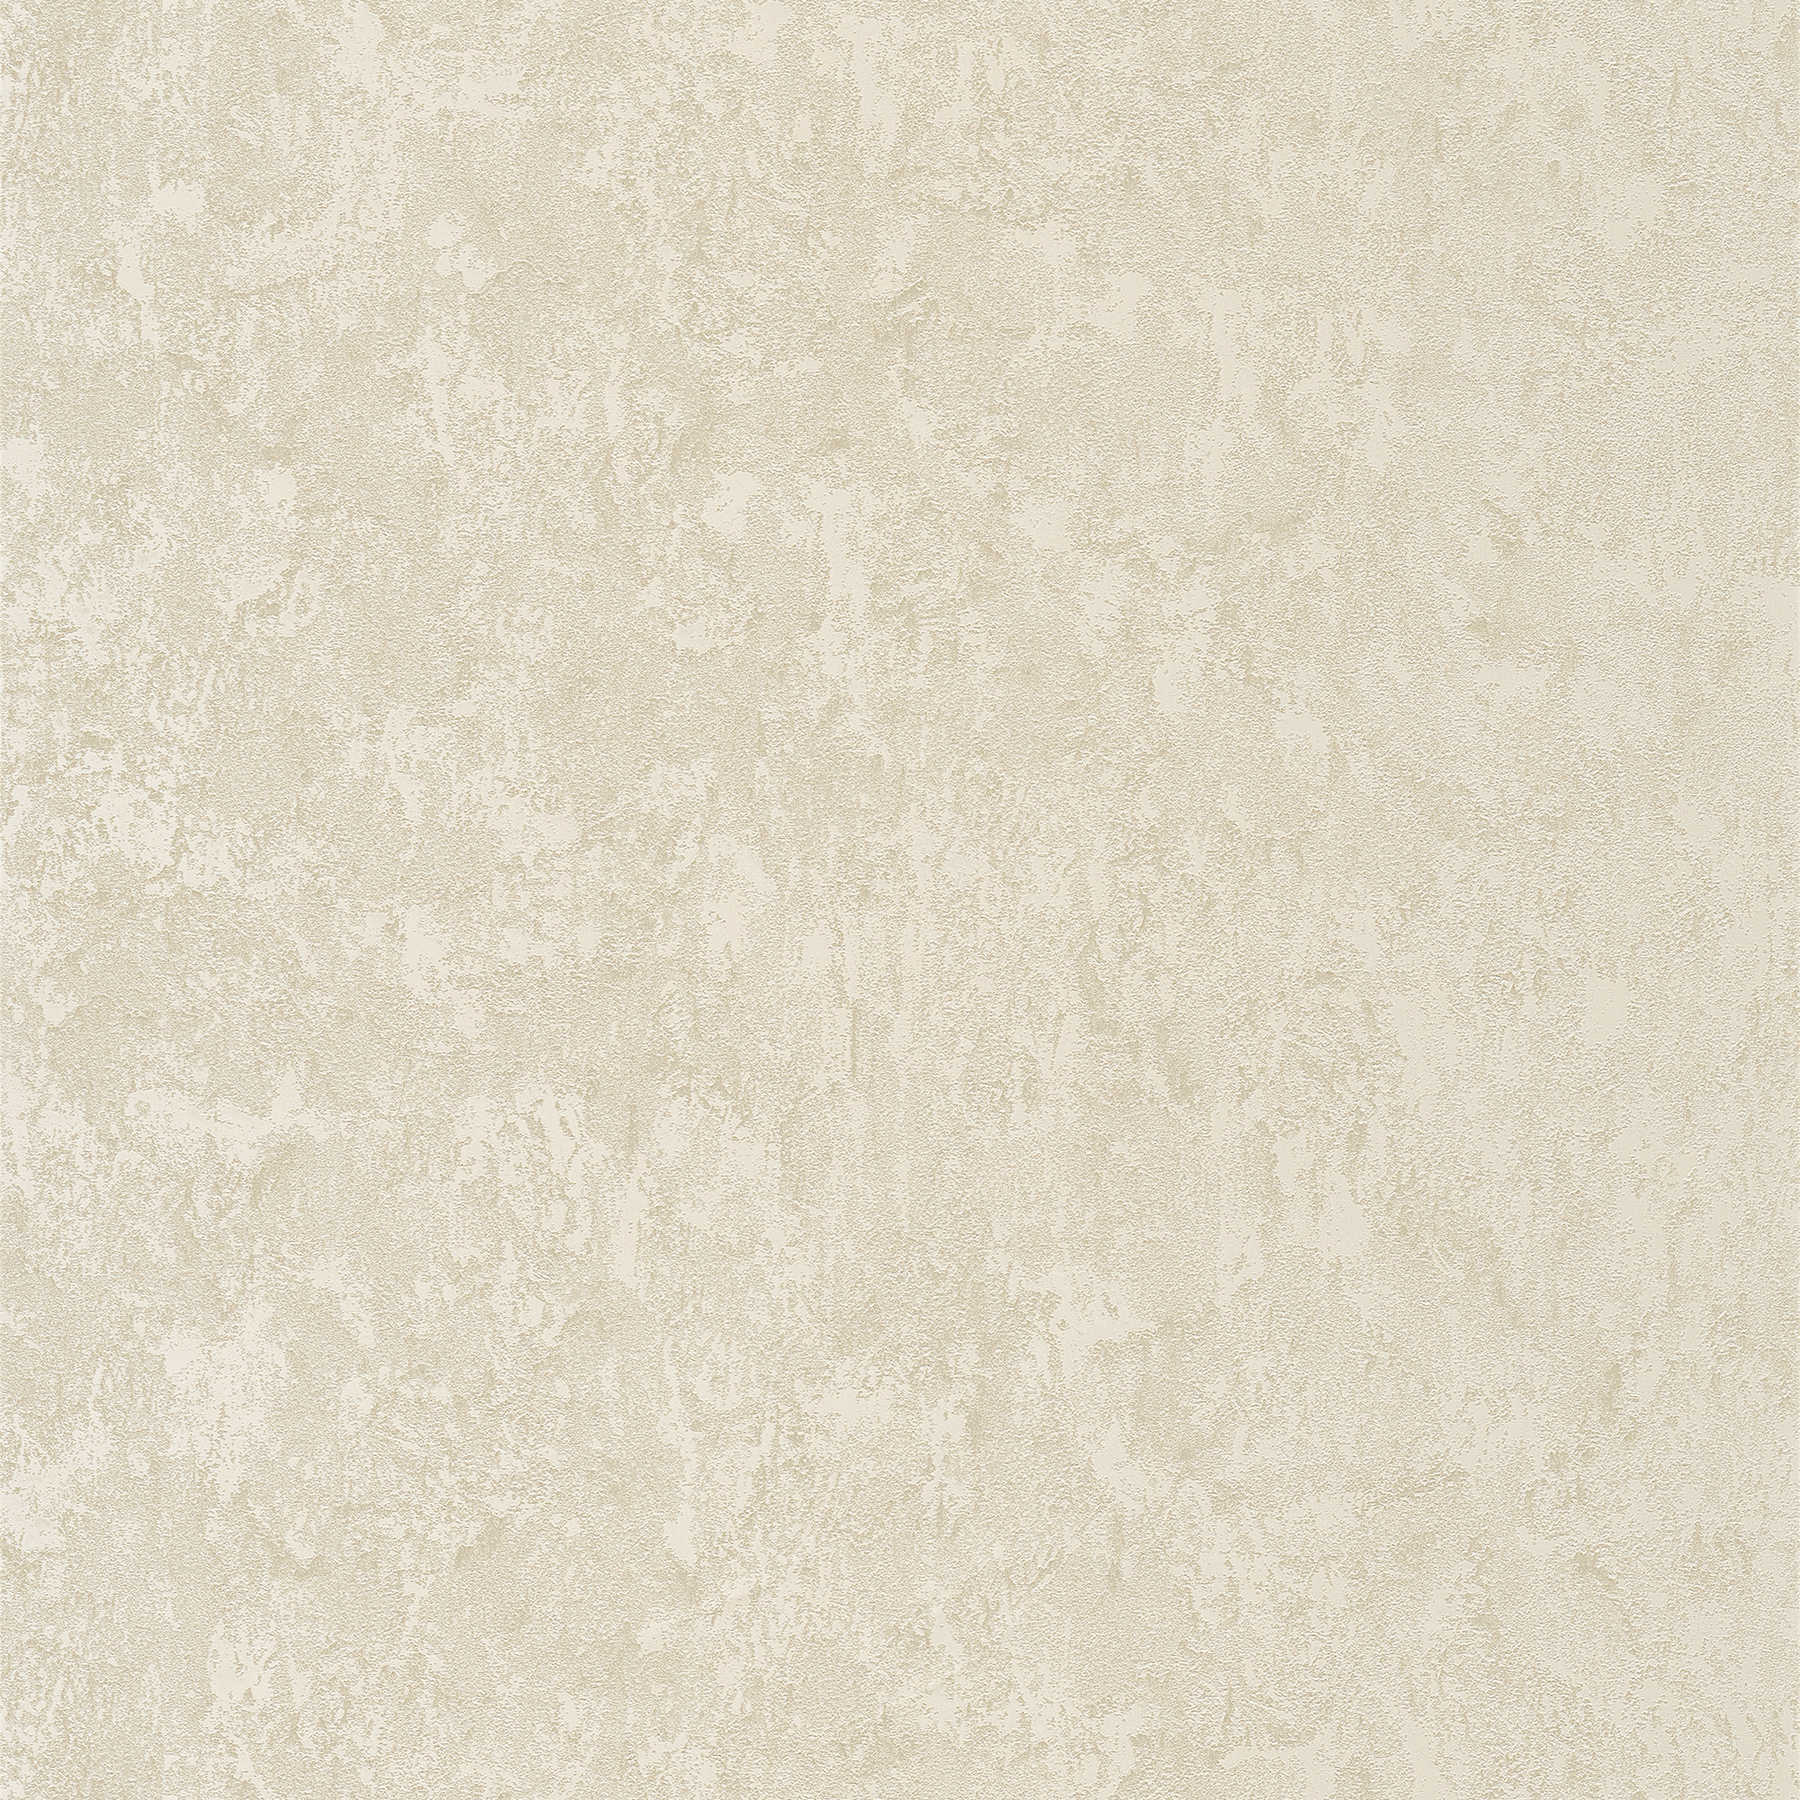 Plain wallpaper plaster look & surface texture - beige, grey
